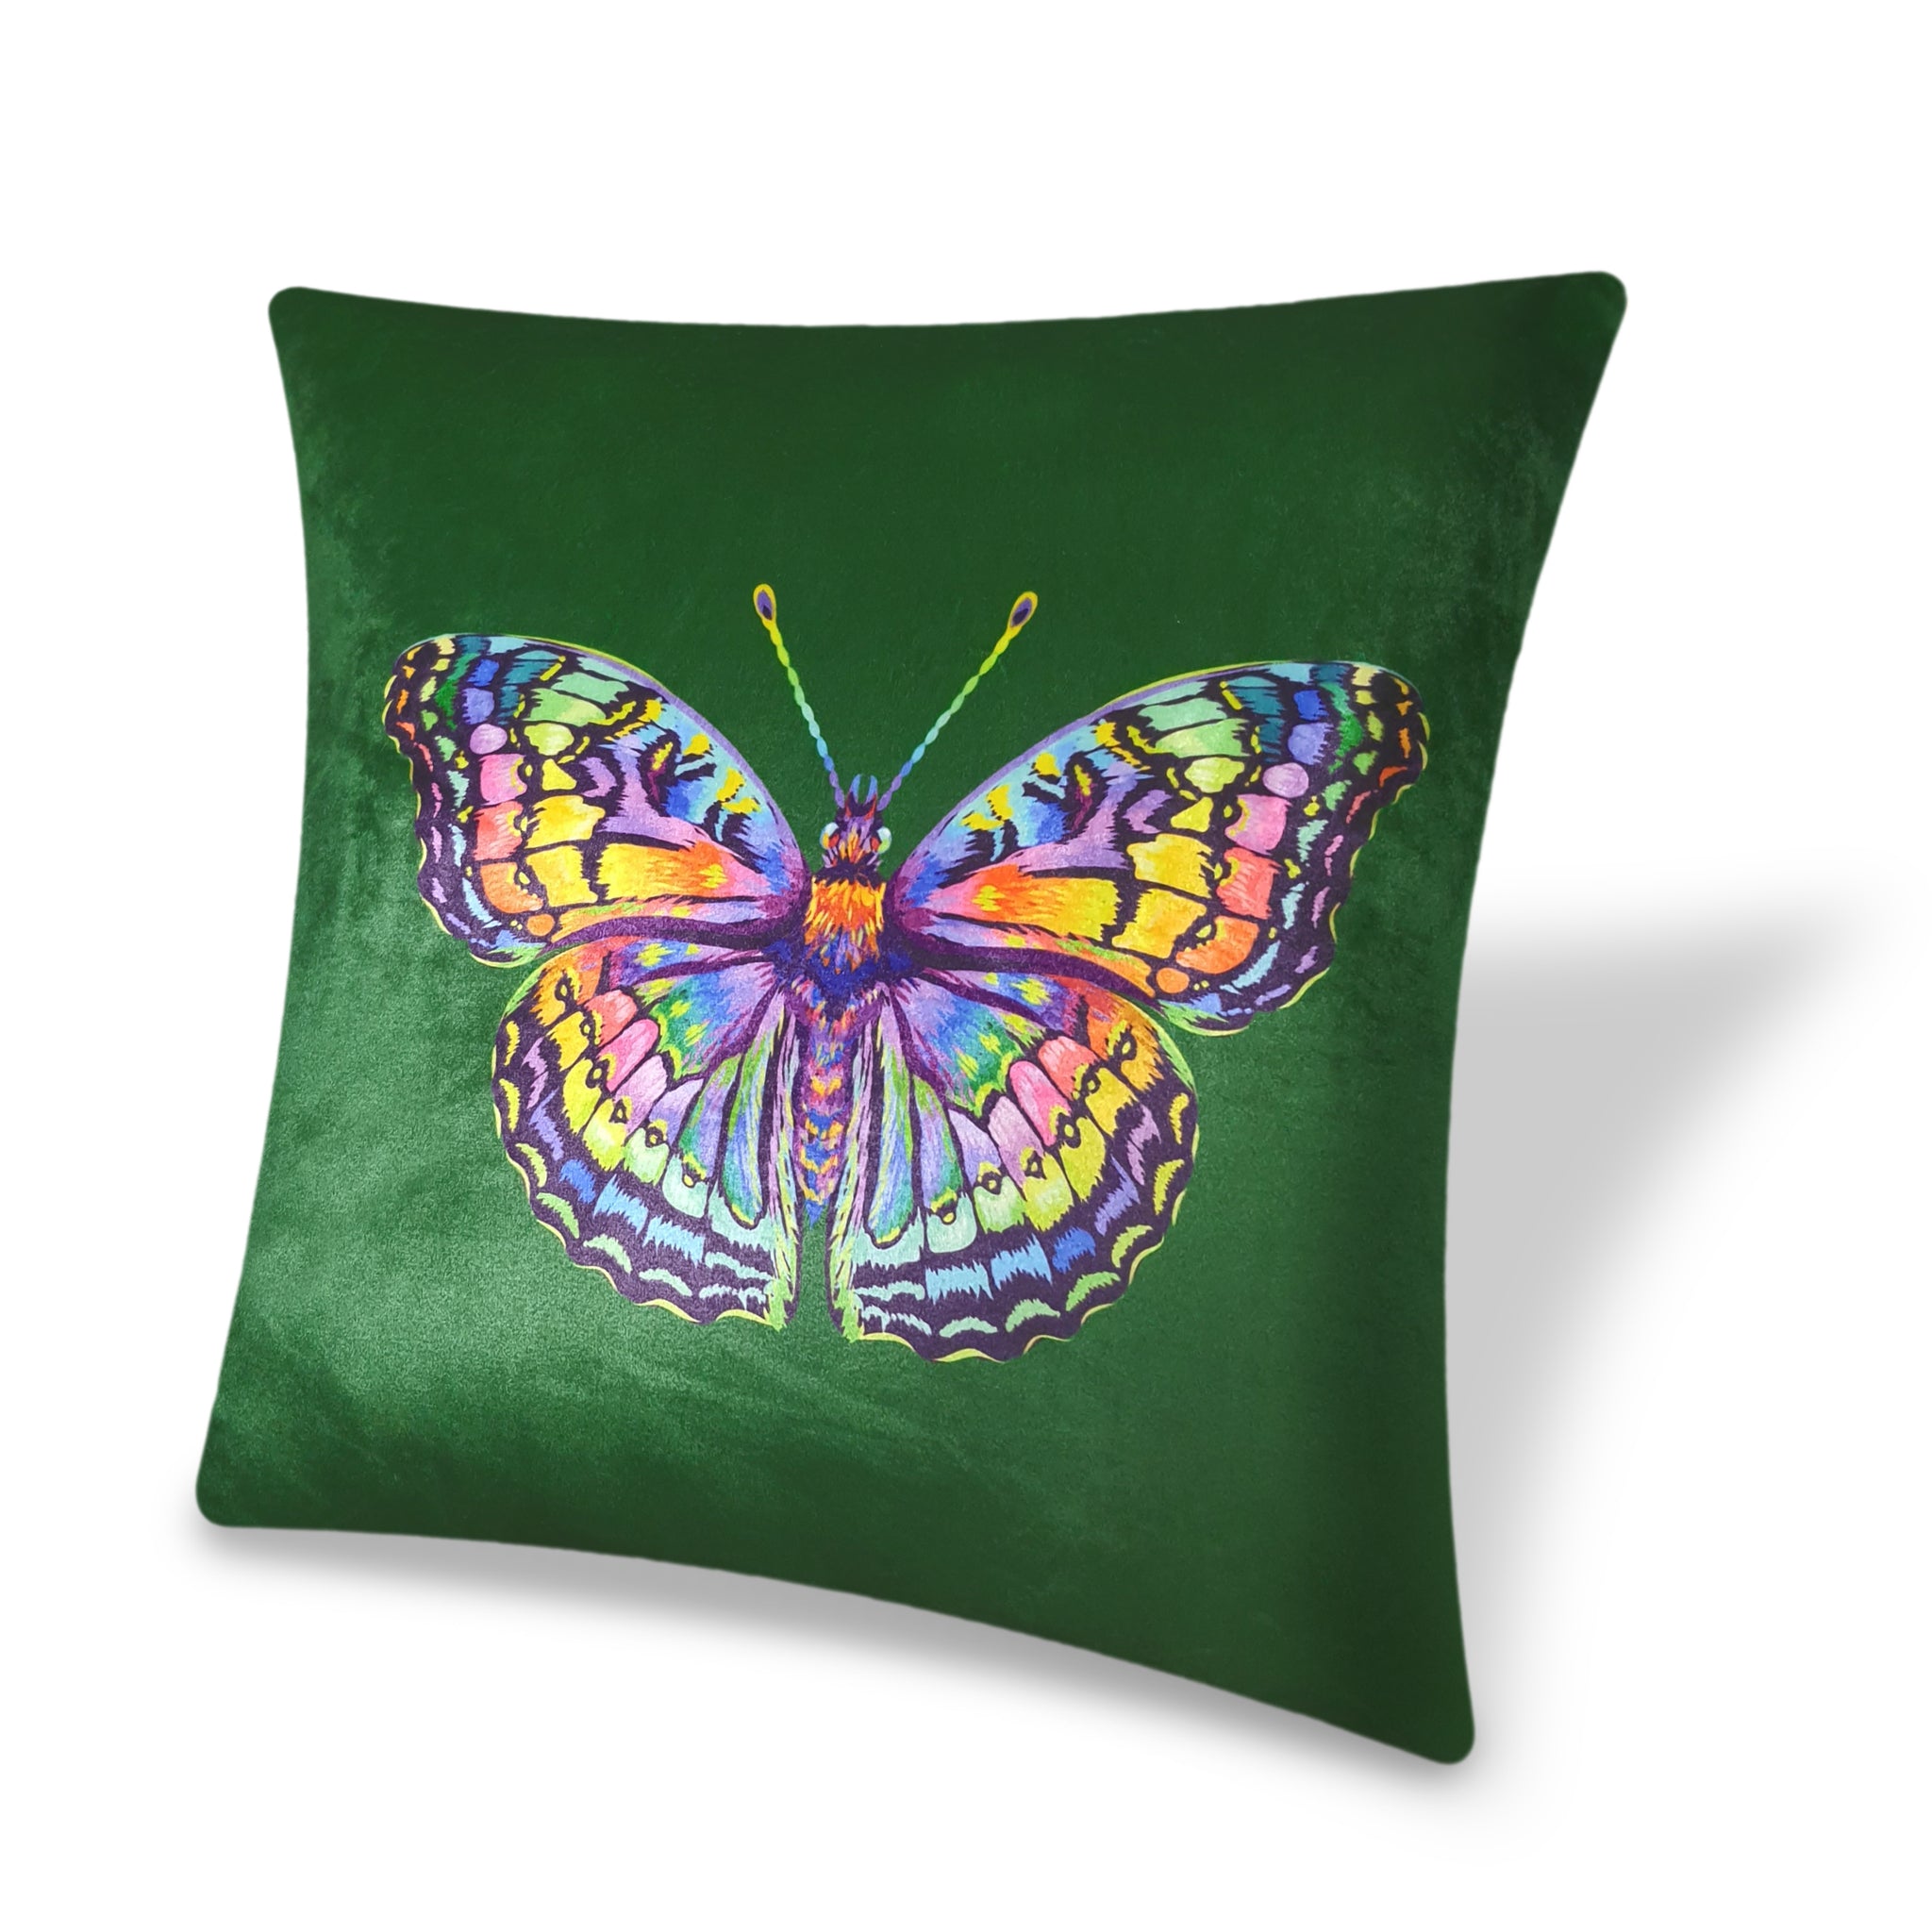  Velvet Cushion Cover Colorful Butterfly Decorative Pillowcase Modern Home Decor Throw Pillow for Sofa Chair 45x45 cm 